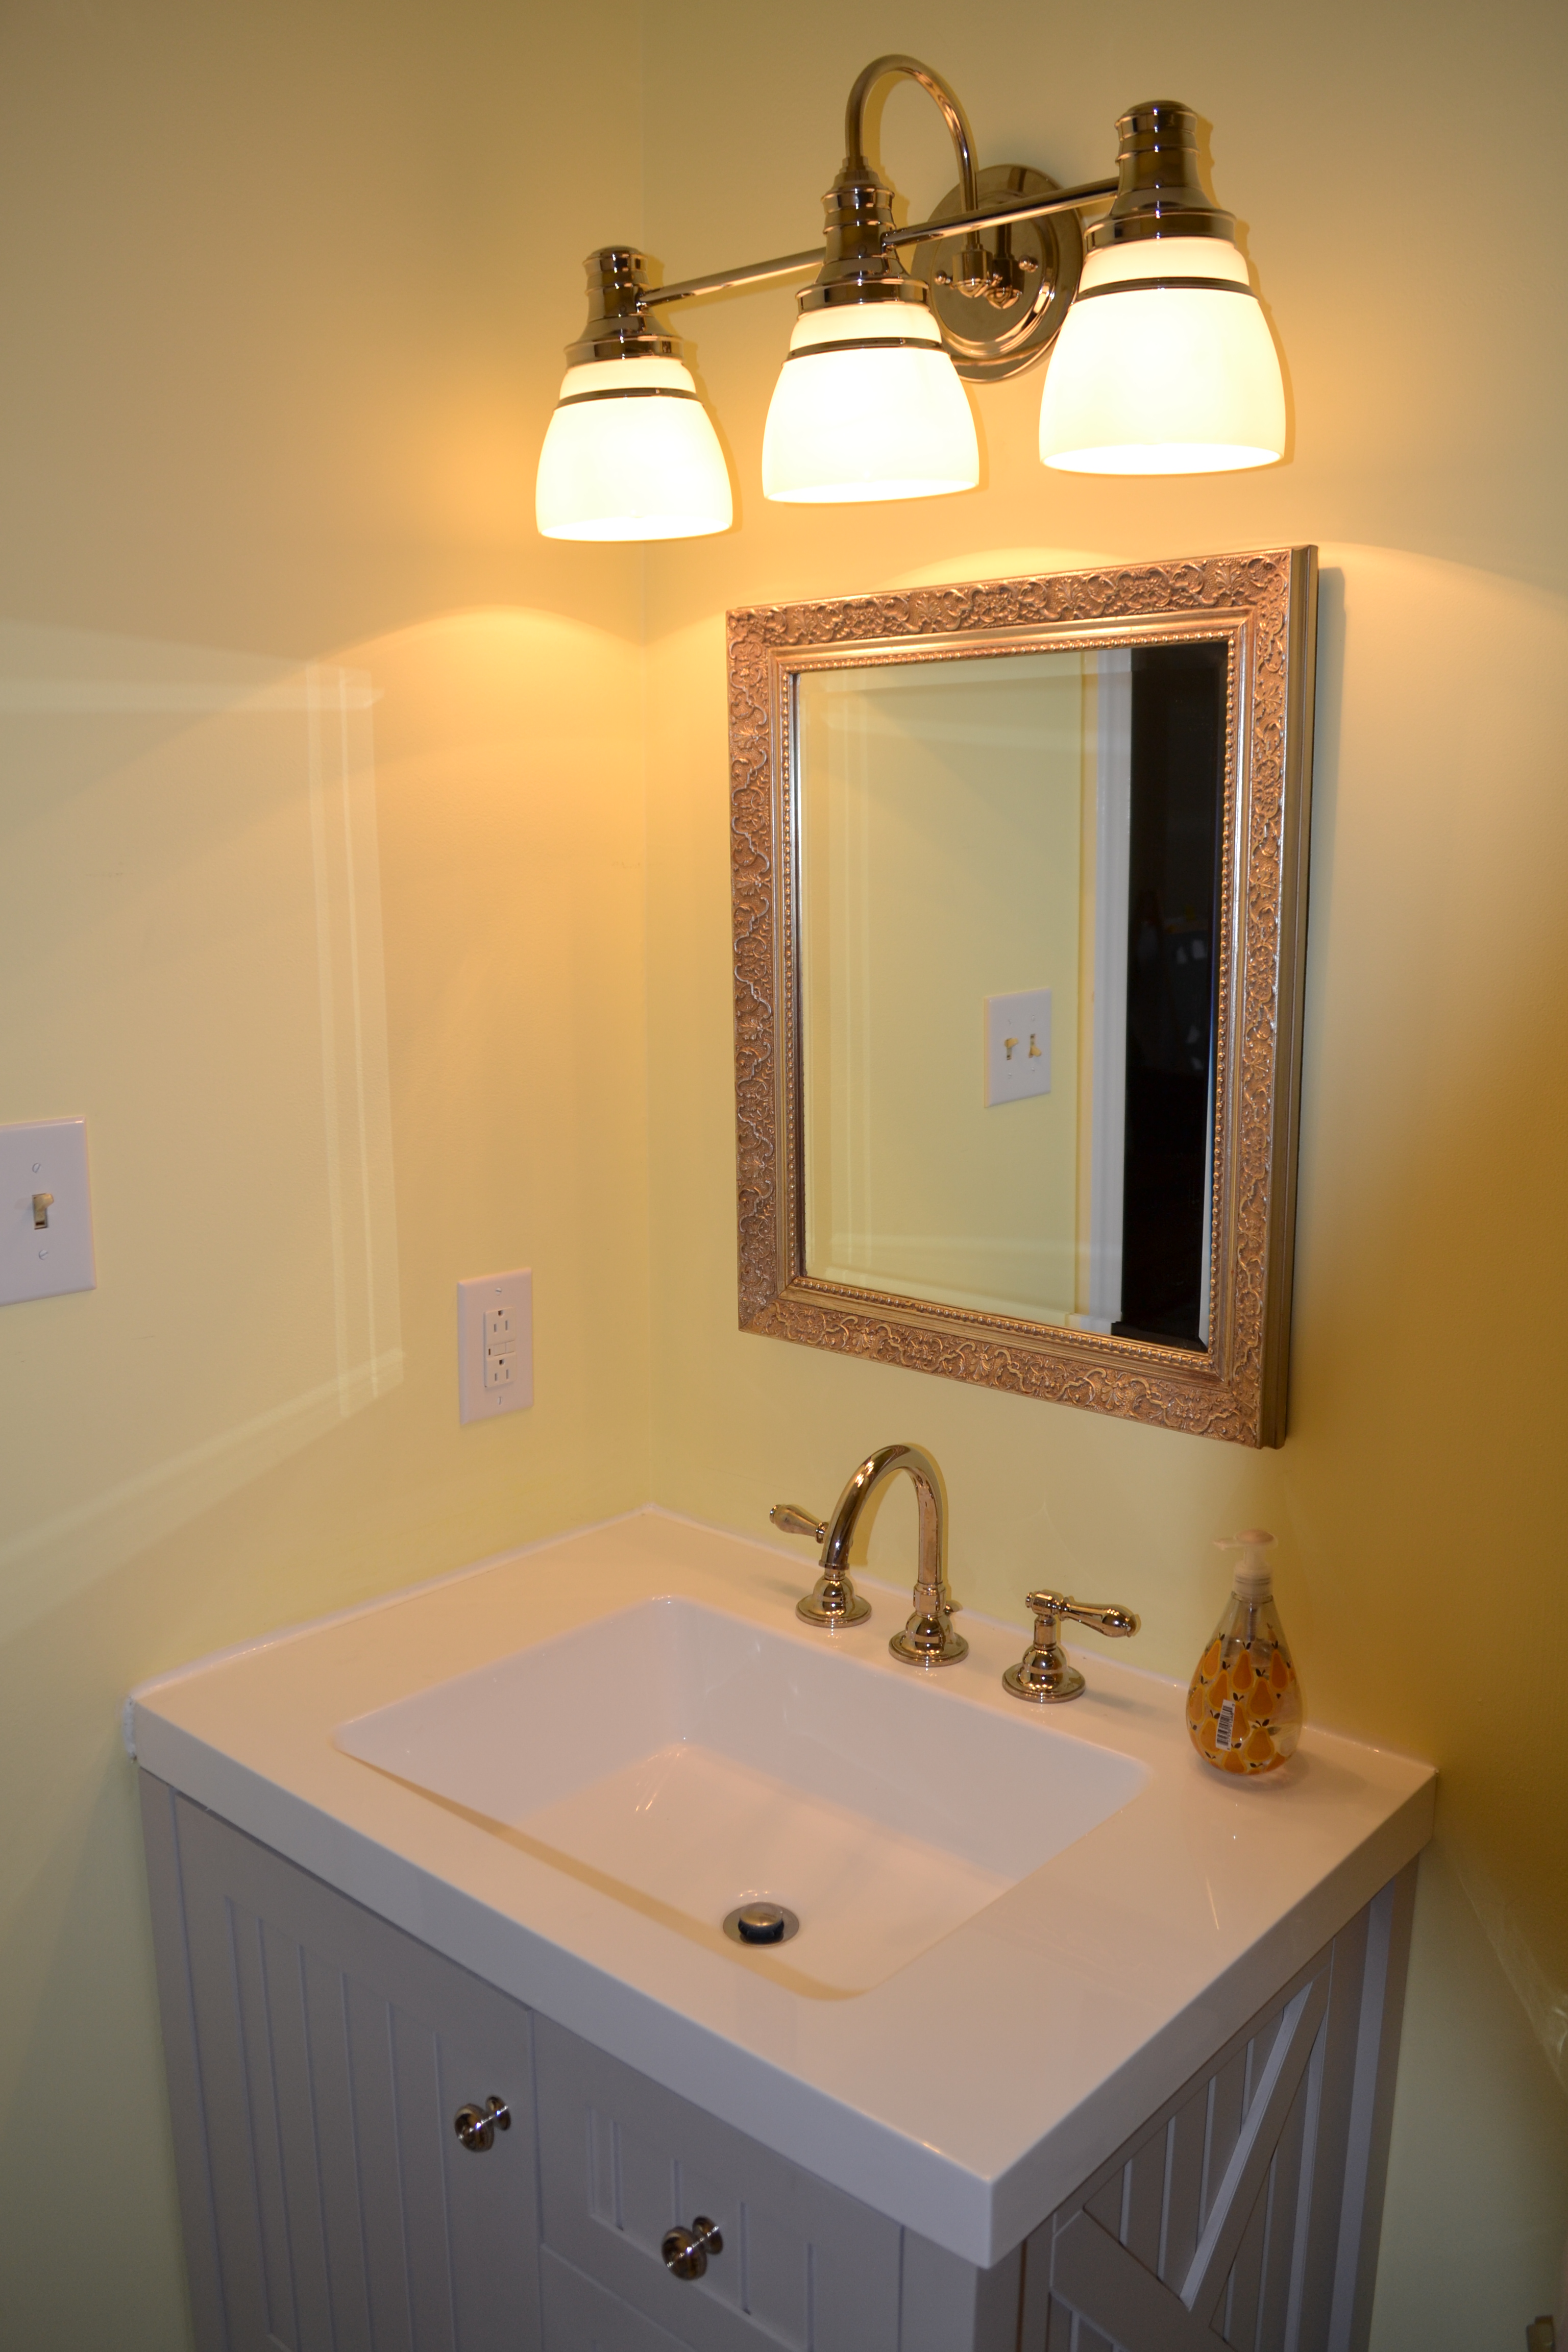 Installing New Vanity Lights to Enhance Your Bathroom Decor